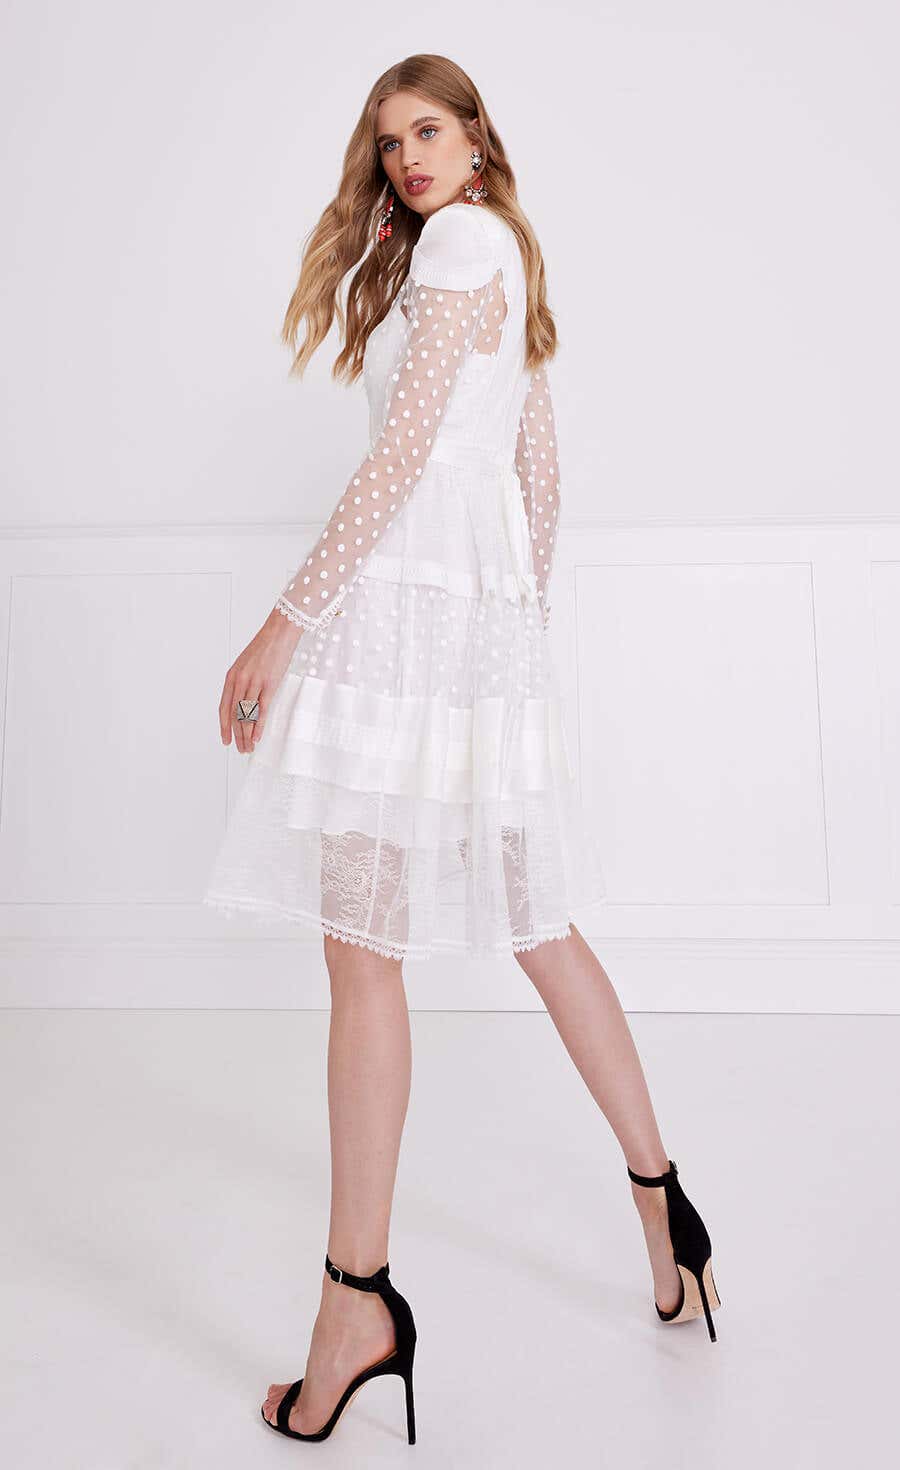 Marlow Sleeved Dress - White